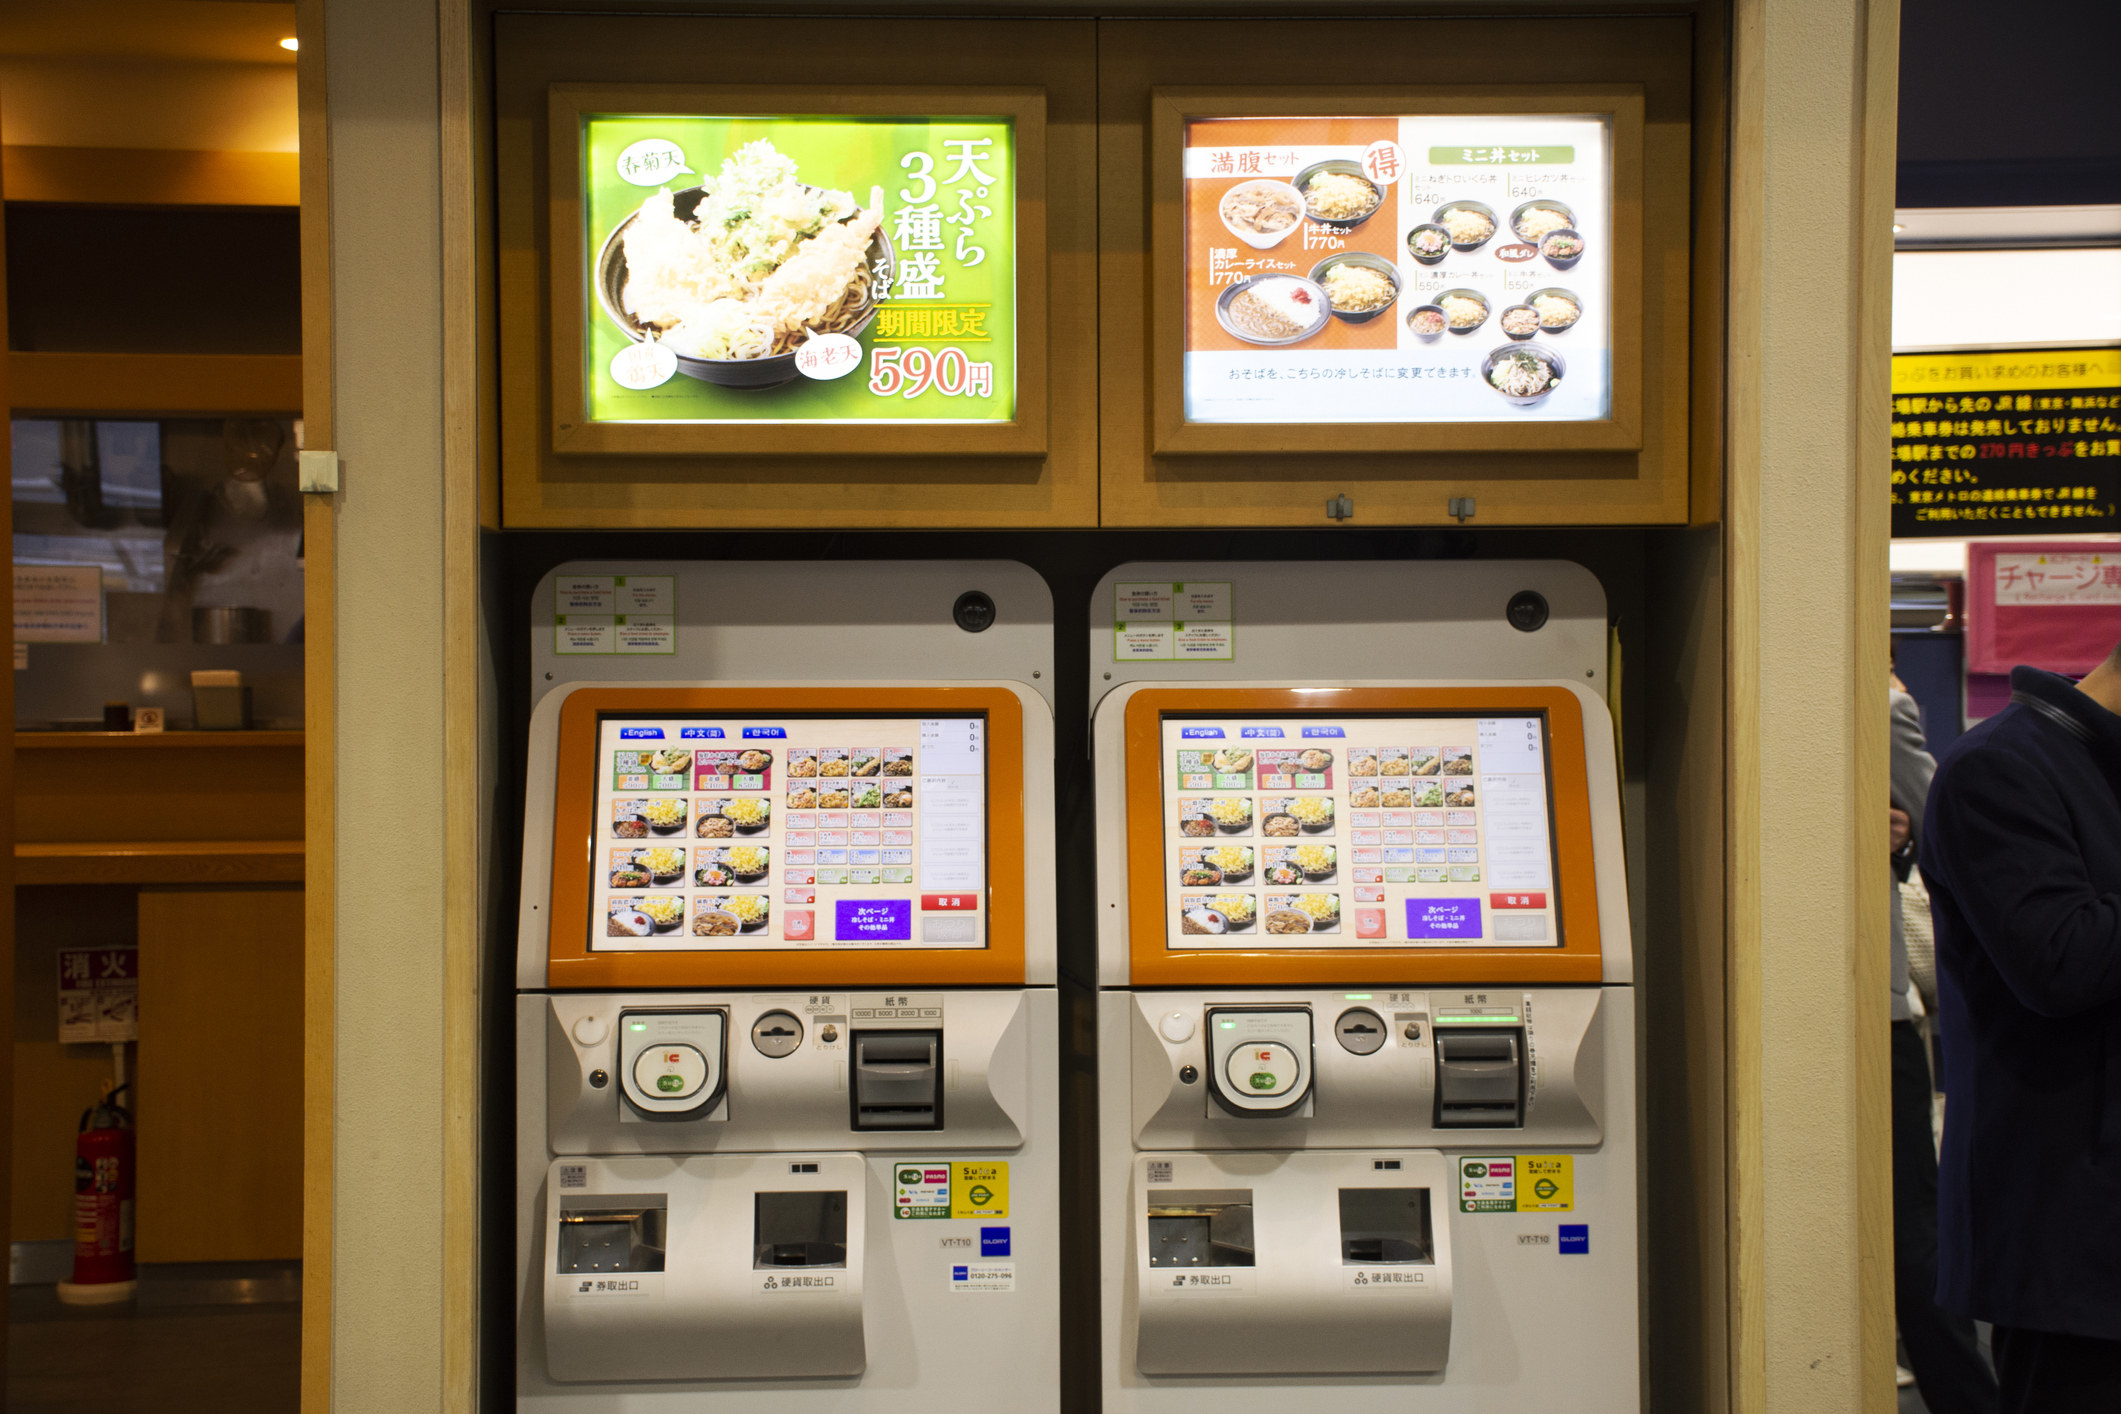 A noodle vending machine in Japan.